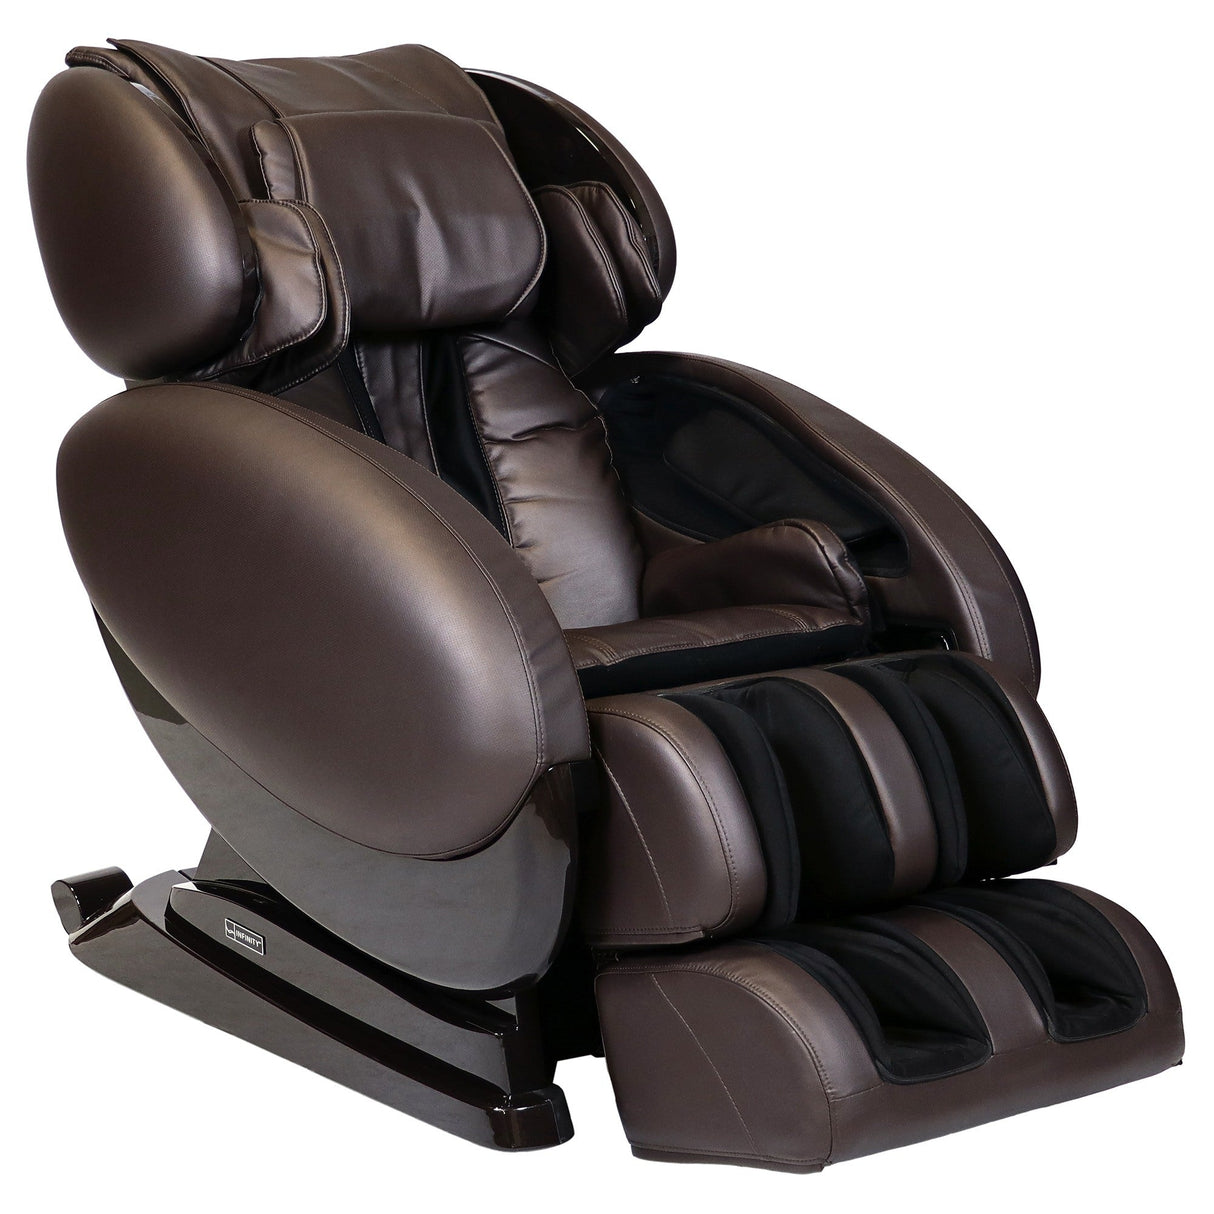 Infinity It-8500 Plus Massage Chairs